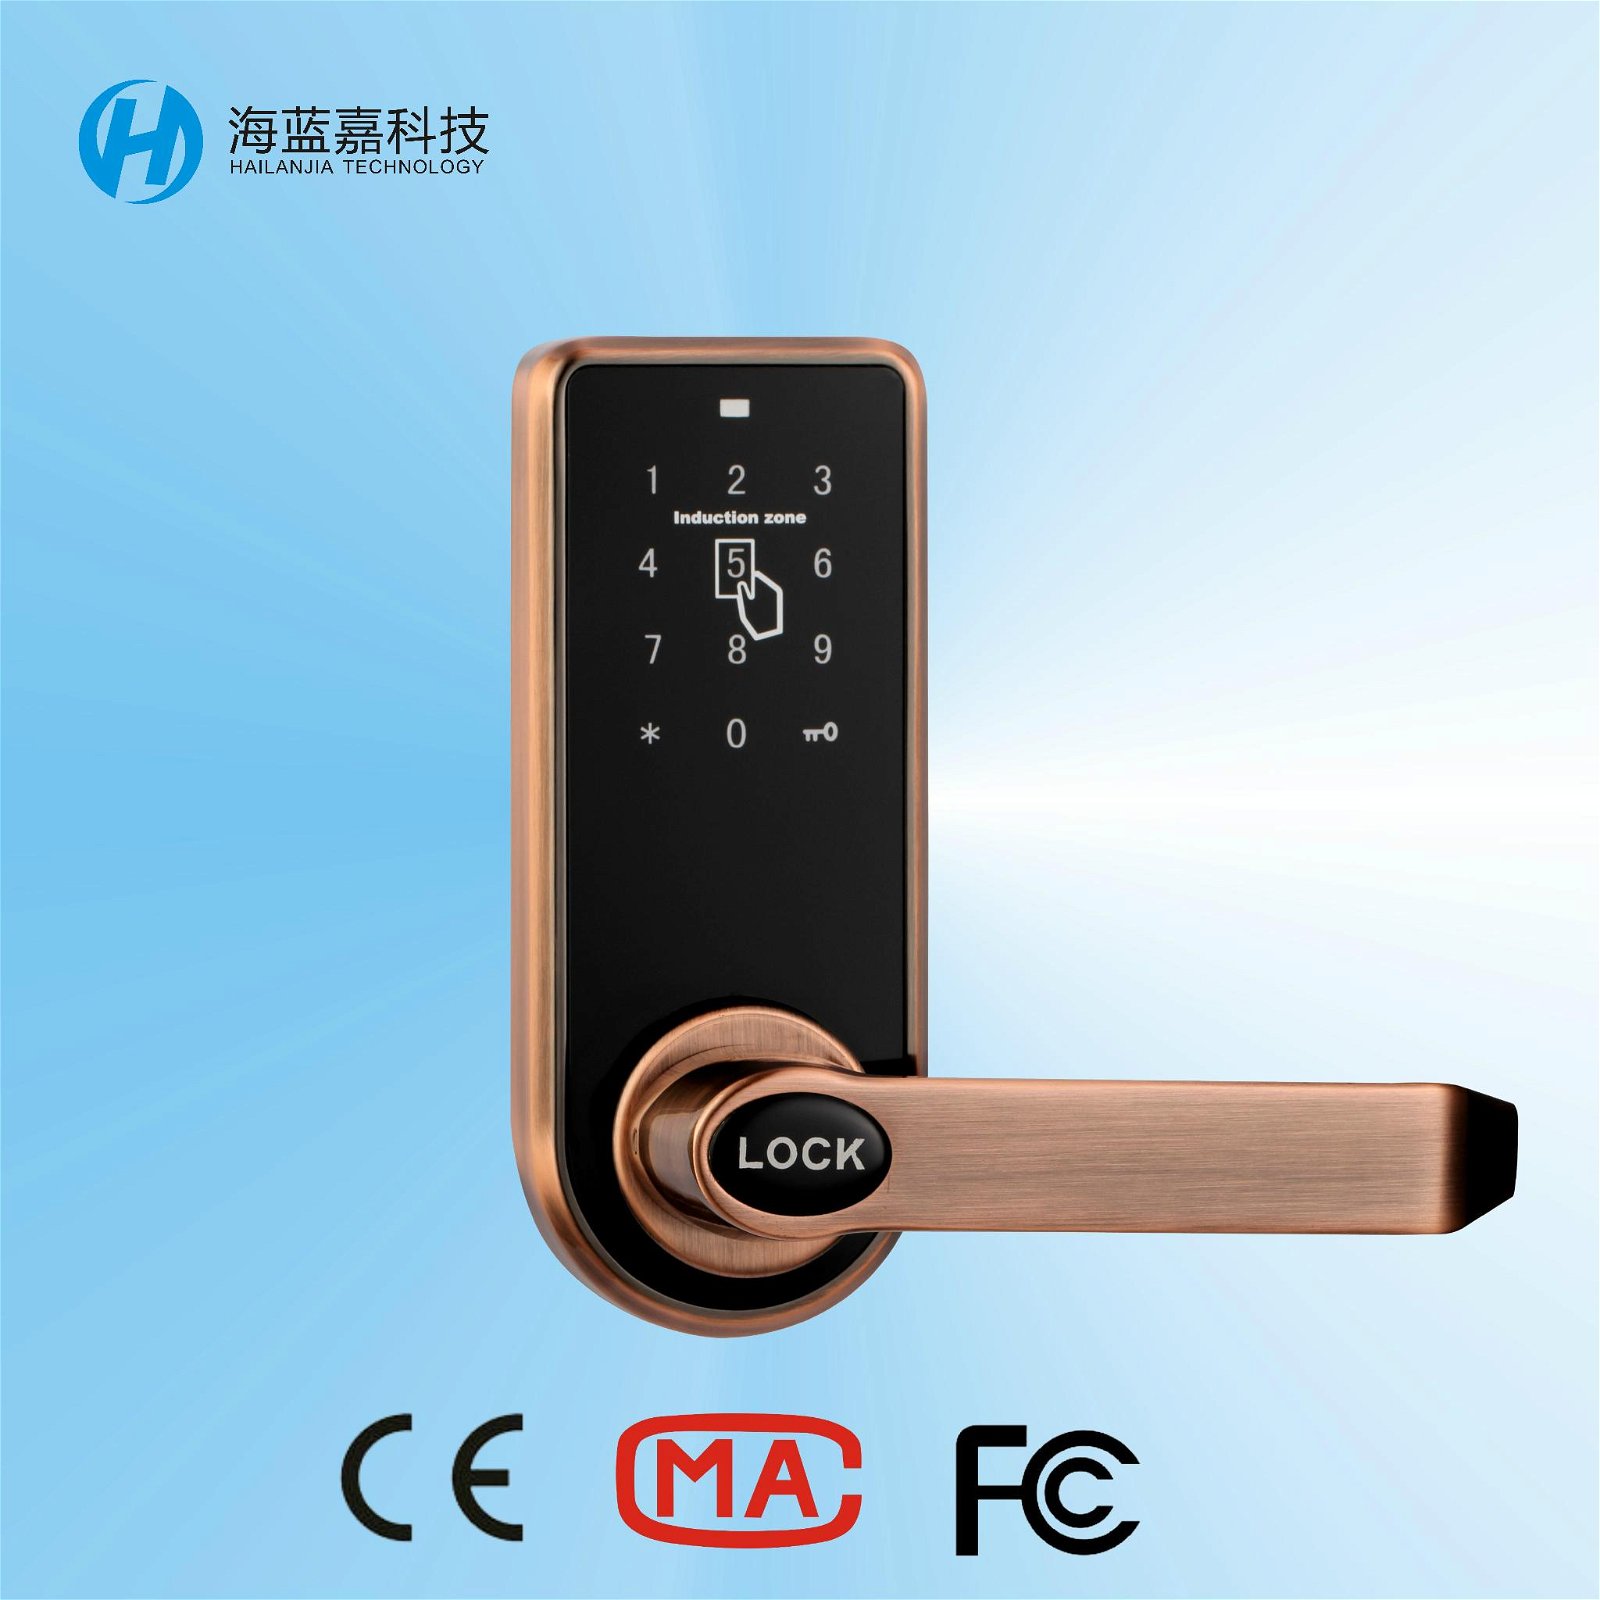 Hailanjia digital code door lock manufacturer since 2005